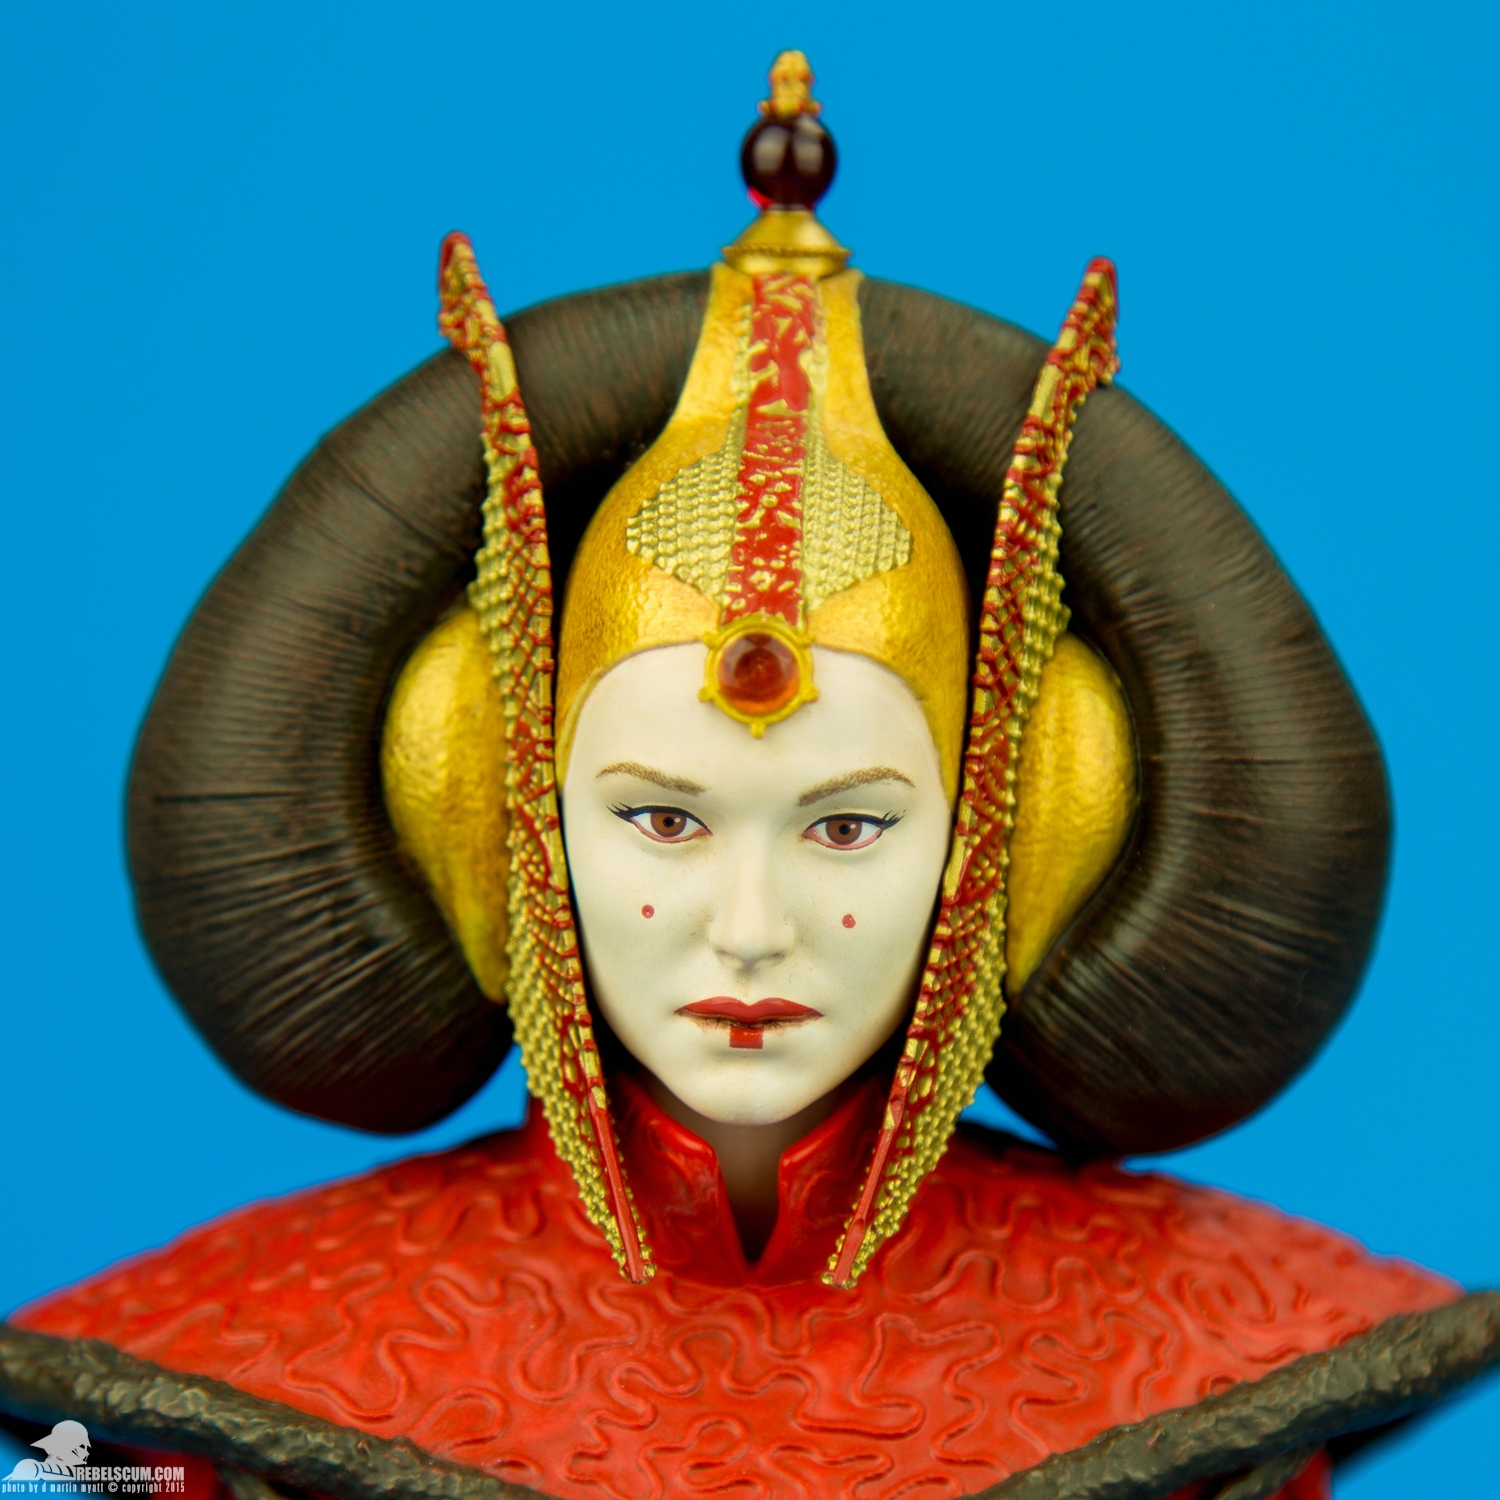 Queen-Amidala-Red-Senate-Gown-Mini-Bust-Gentle-Giant-005.jpg